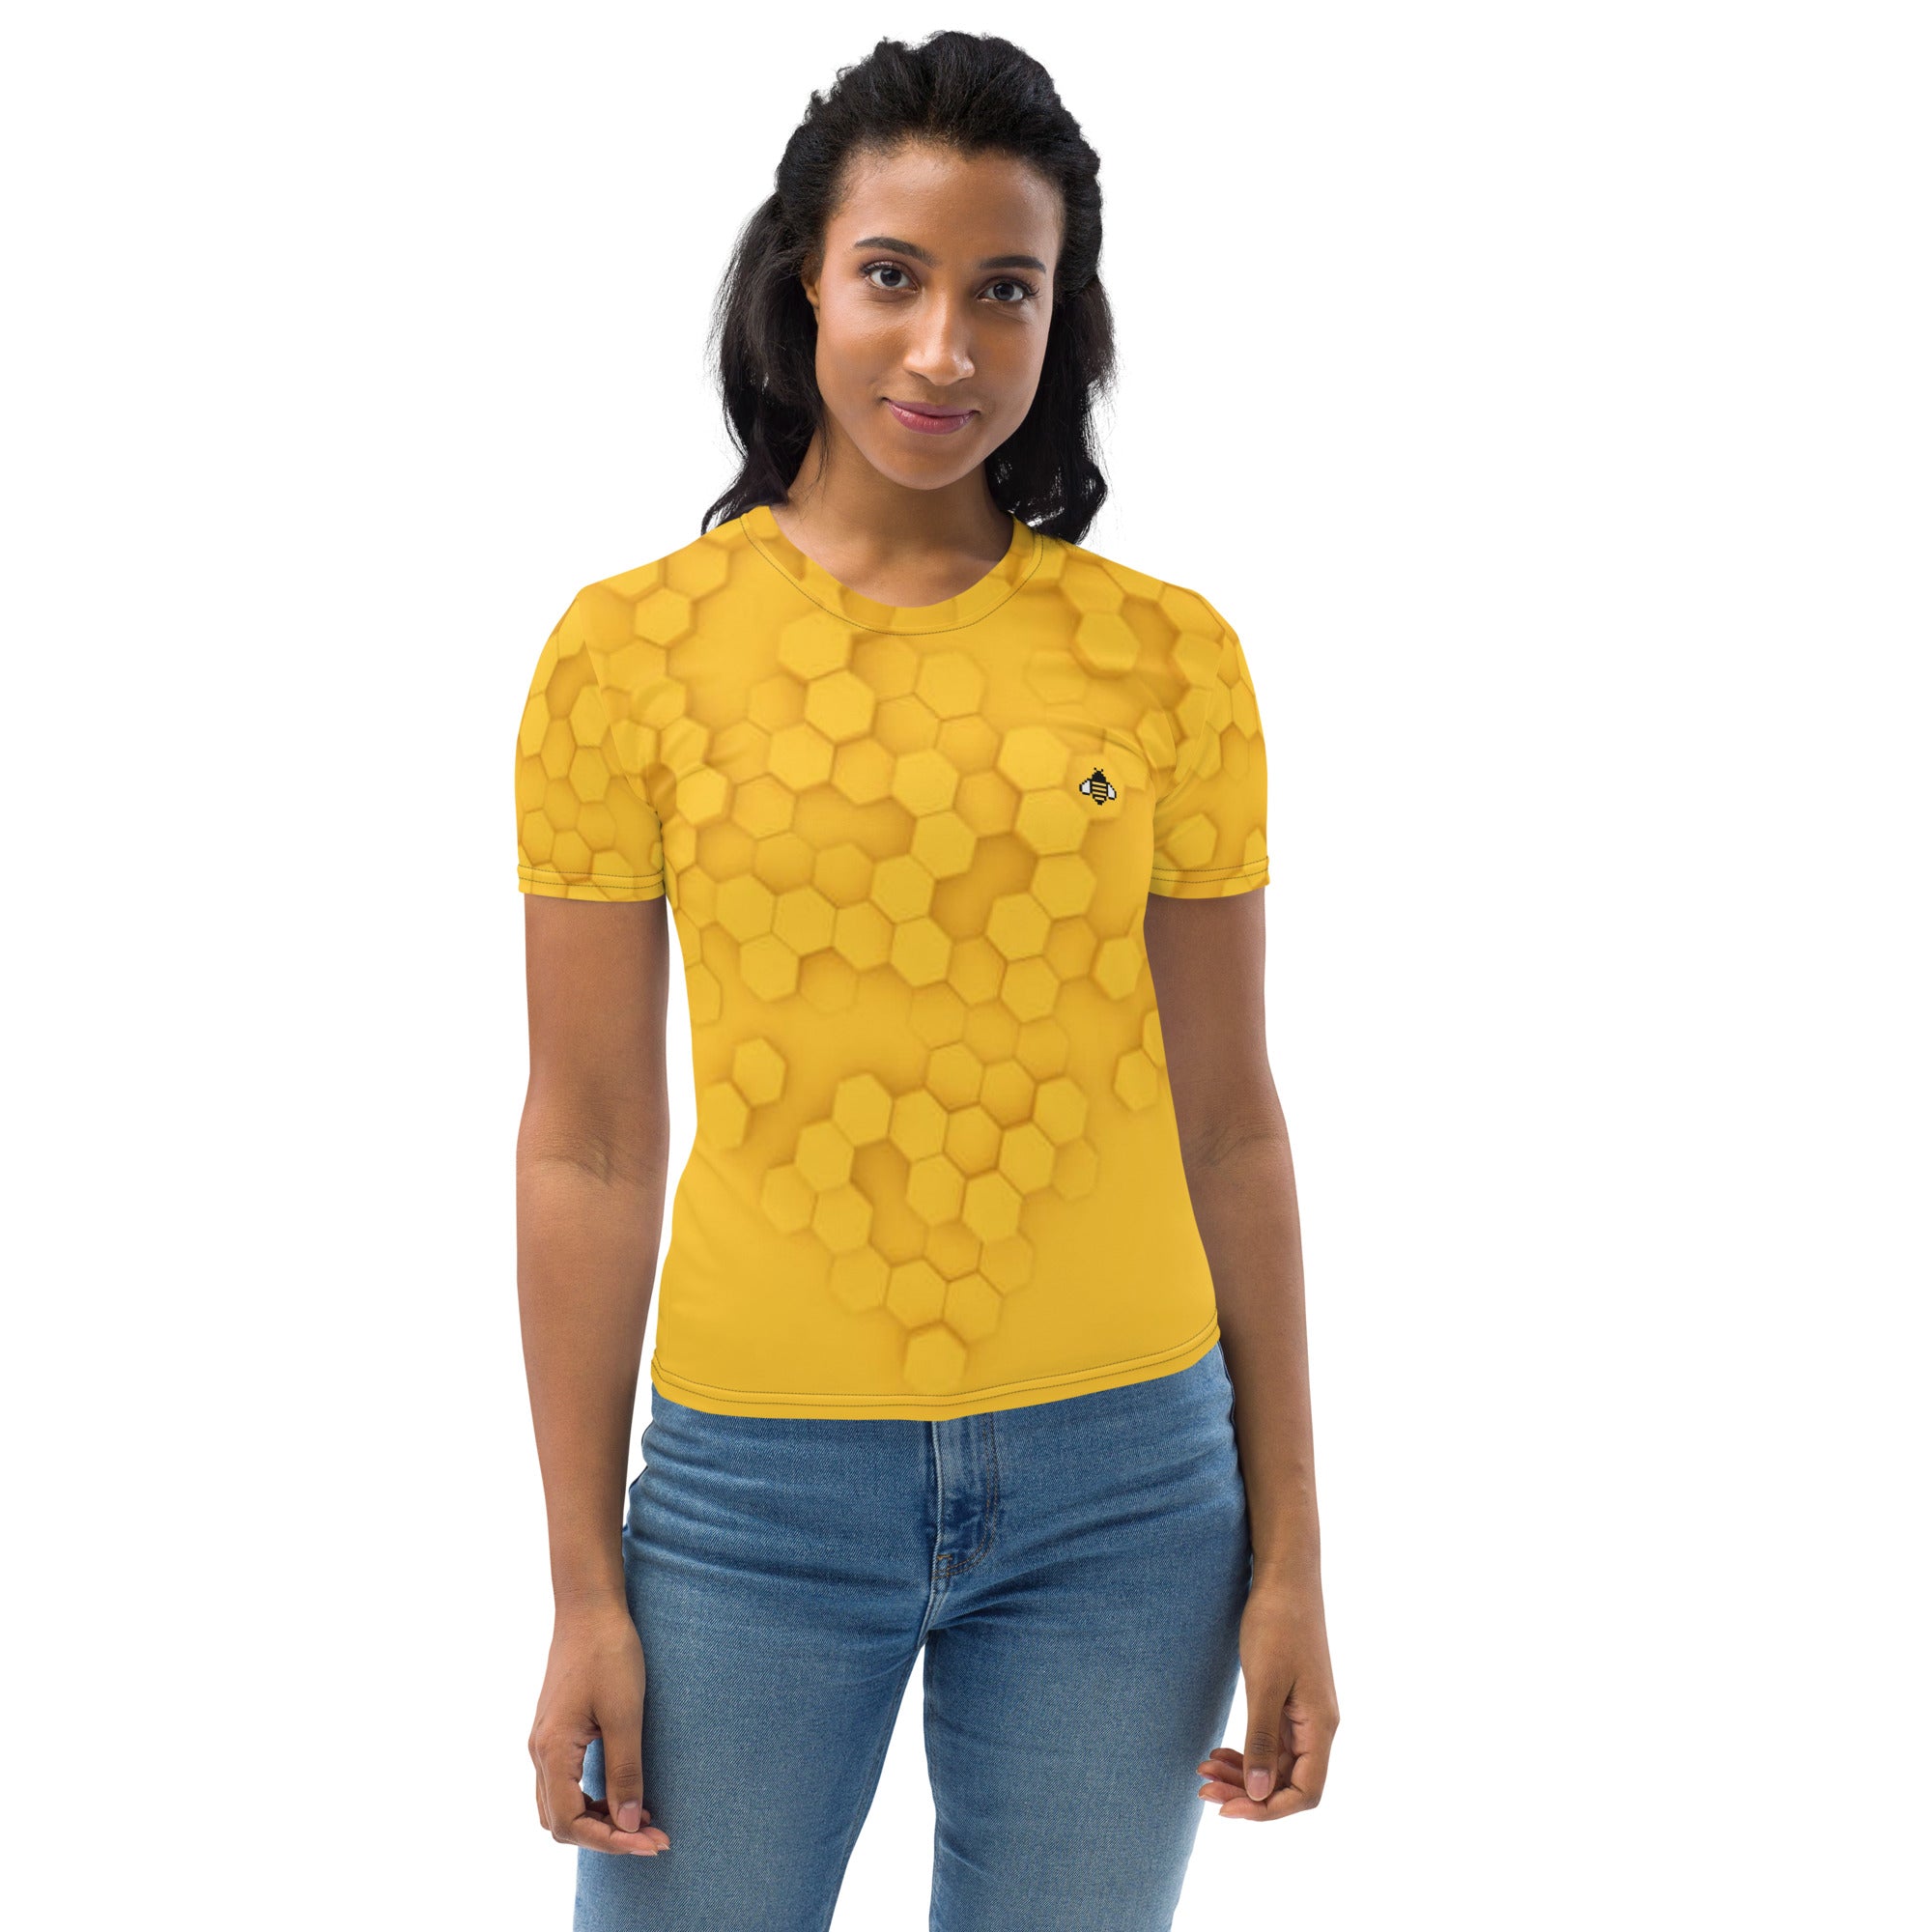 Honeycomb Women's TShirt - Front - https://ascensionemporium.net